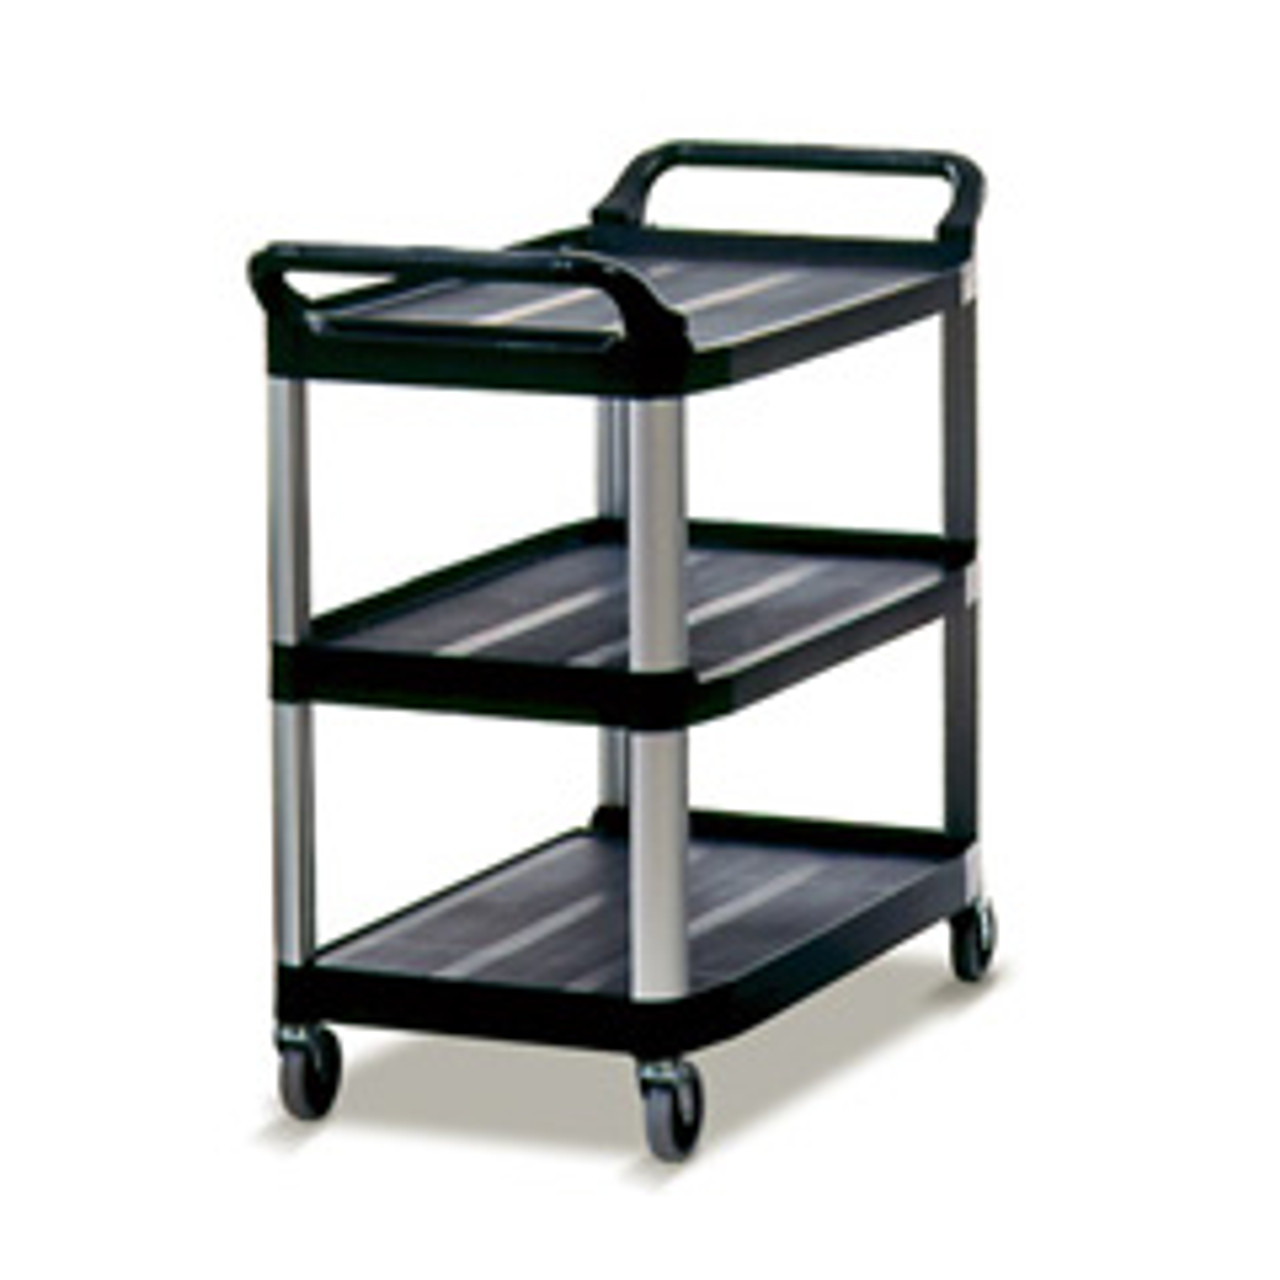 Rubbermaid 4091bla utility cart 3 shelf black plastic